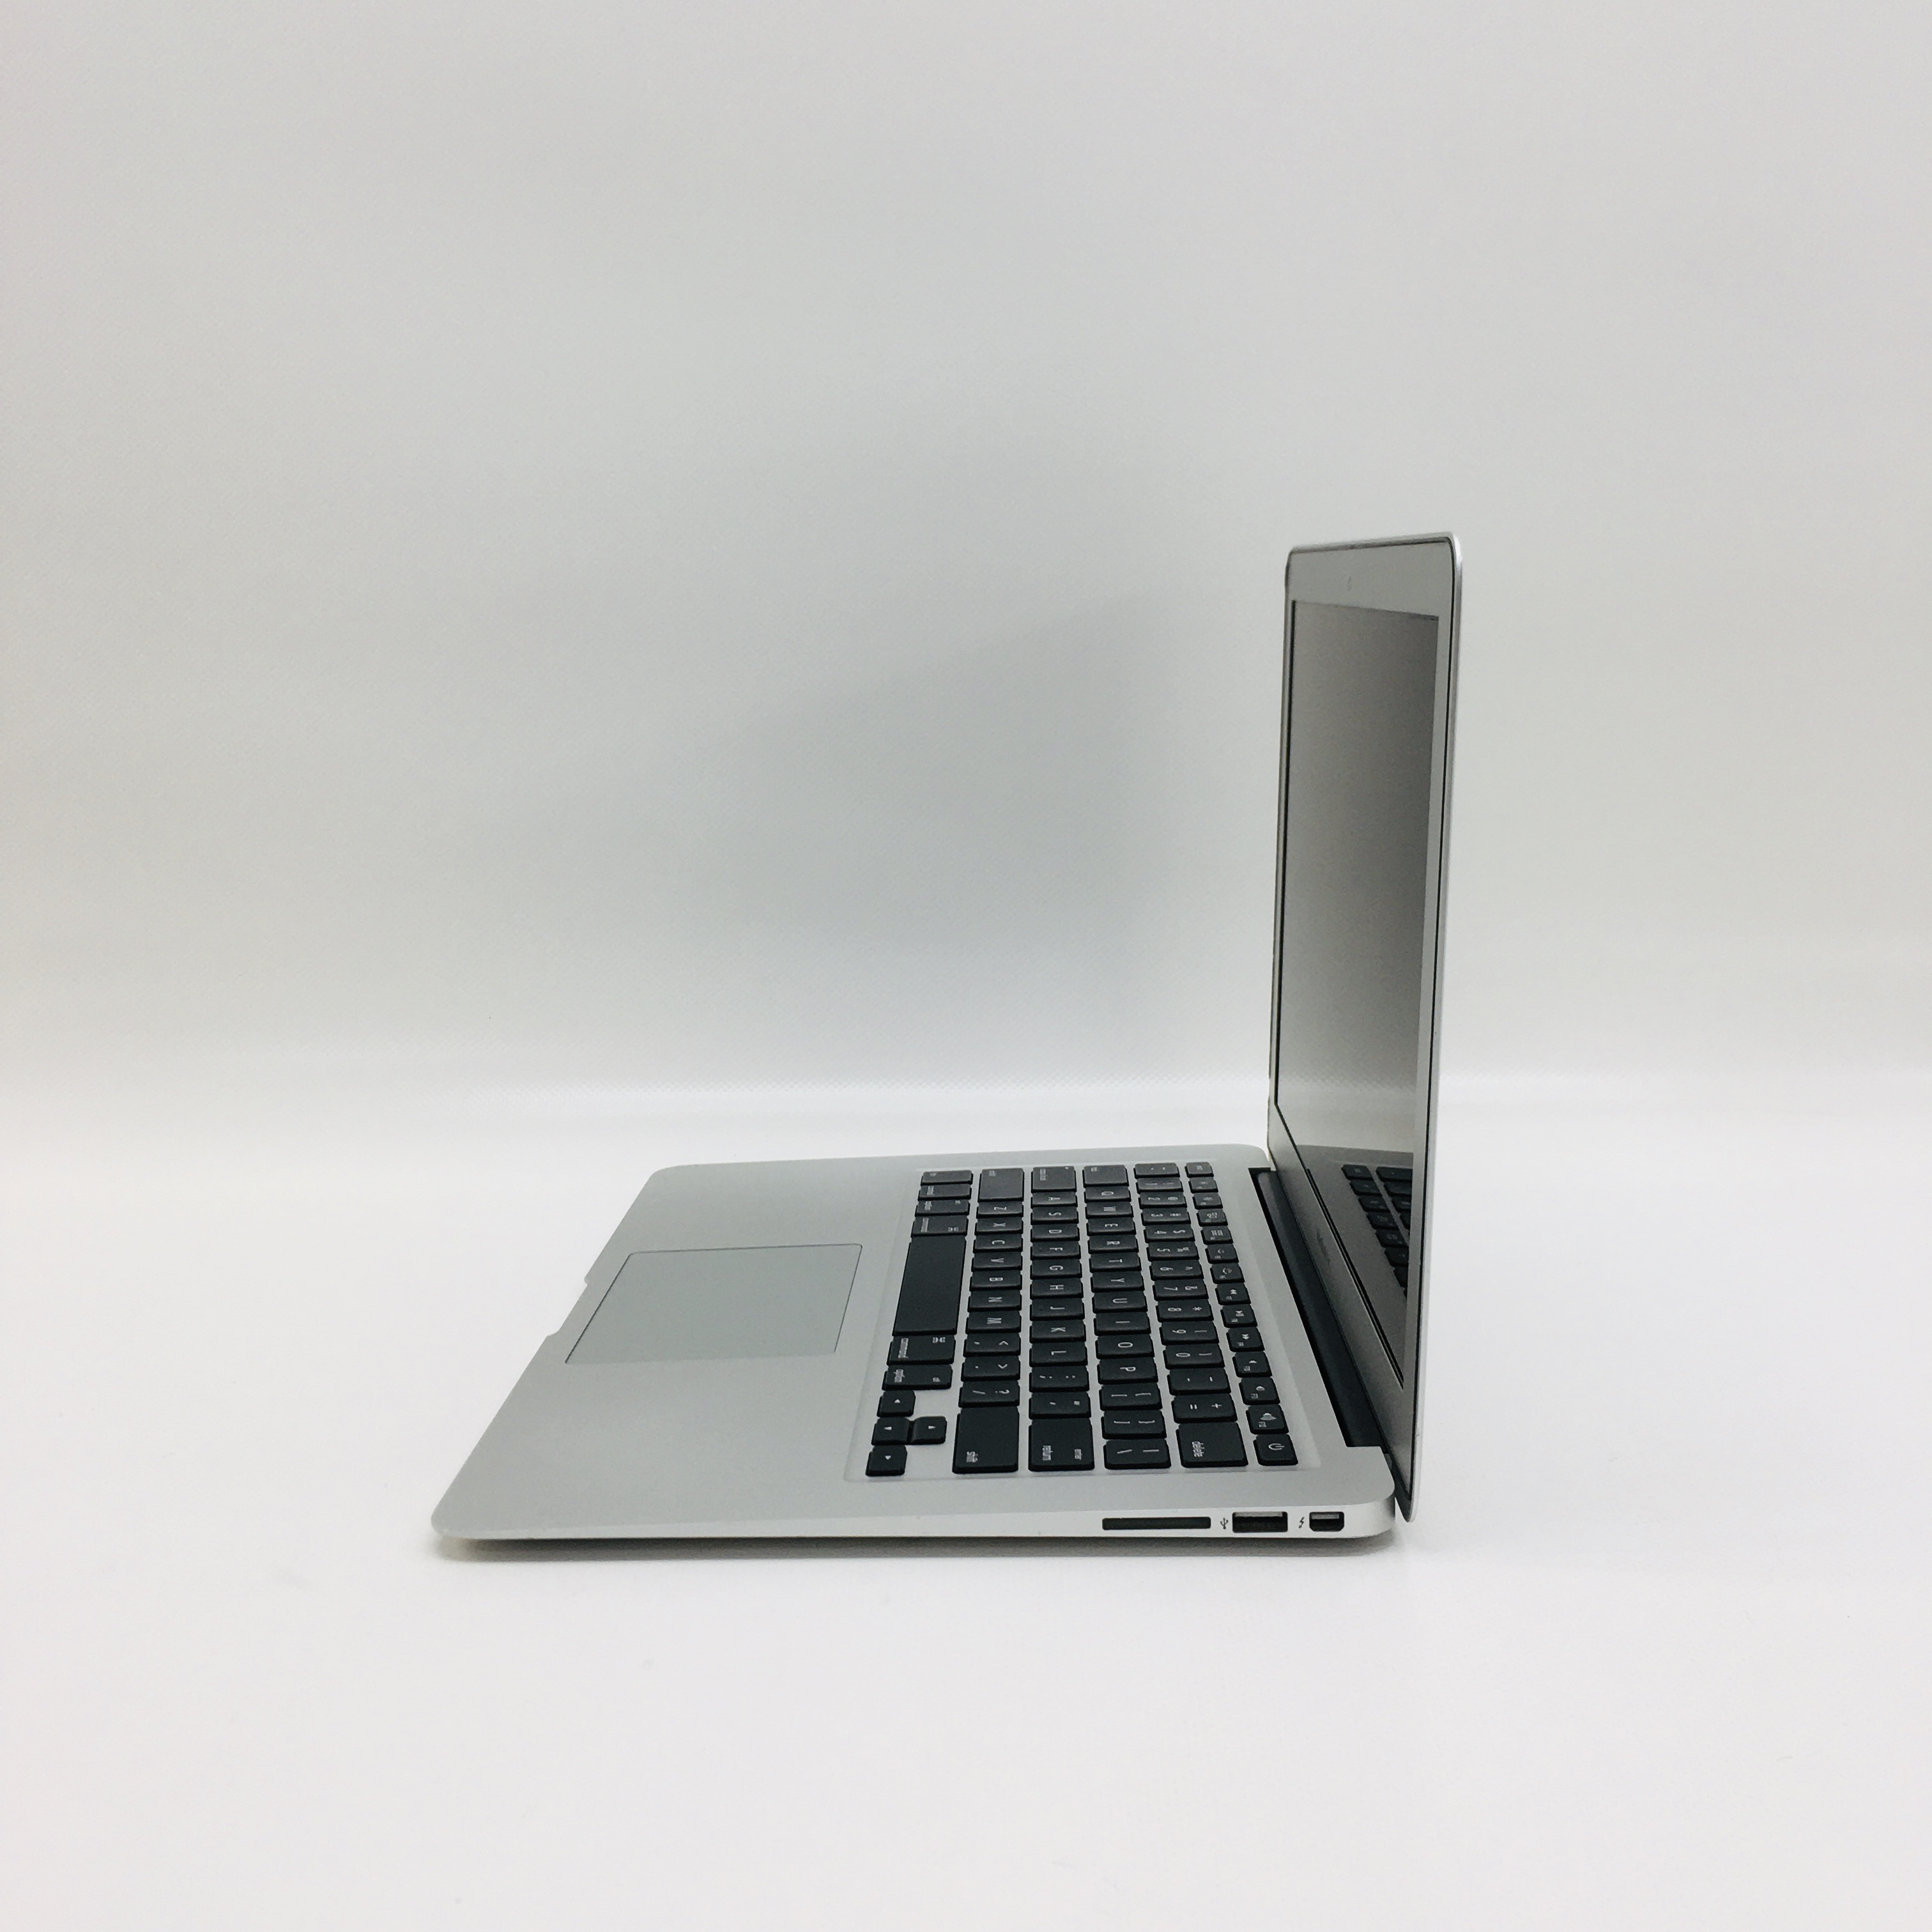 MacBook Air 13" Early 2015 (Intel Core i5 1.6 GHz 8 GB RAM 128 GB SSD), Intel Core i5 1.6 GHz, 8 GB RAM, 128 GB SSD, image 3